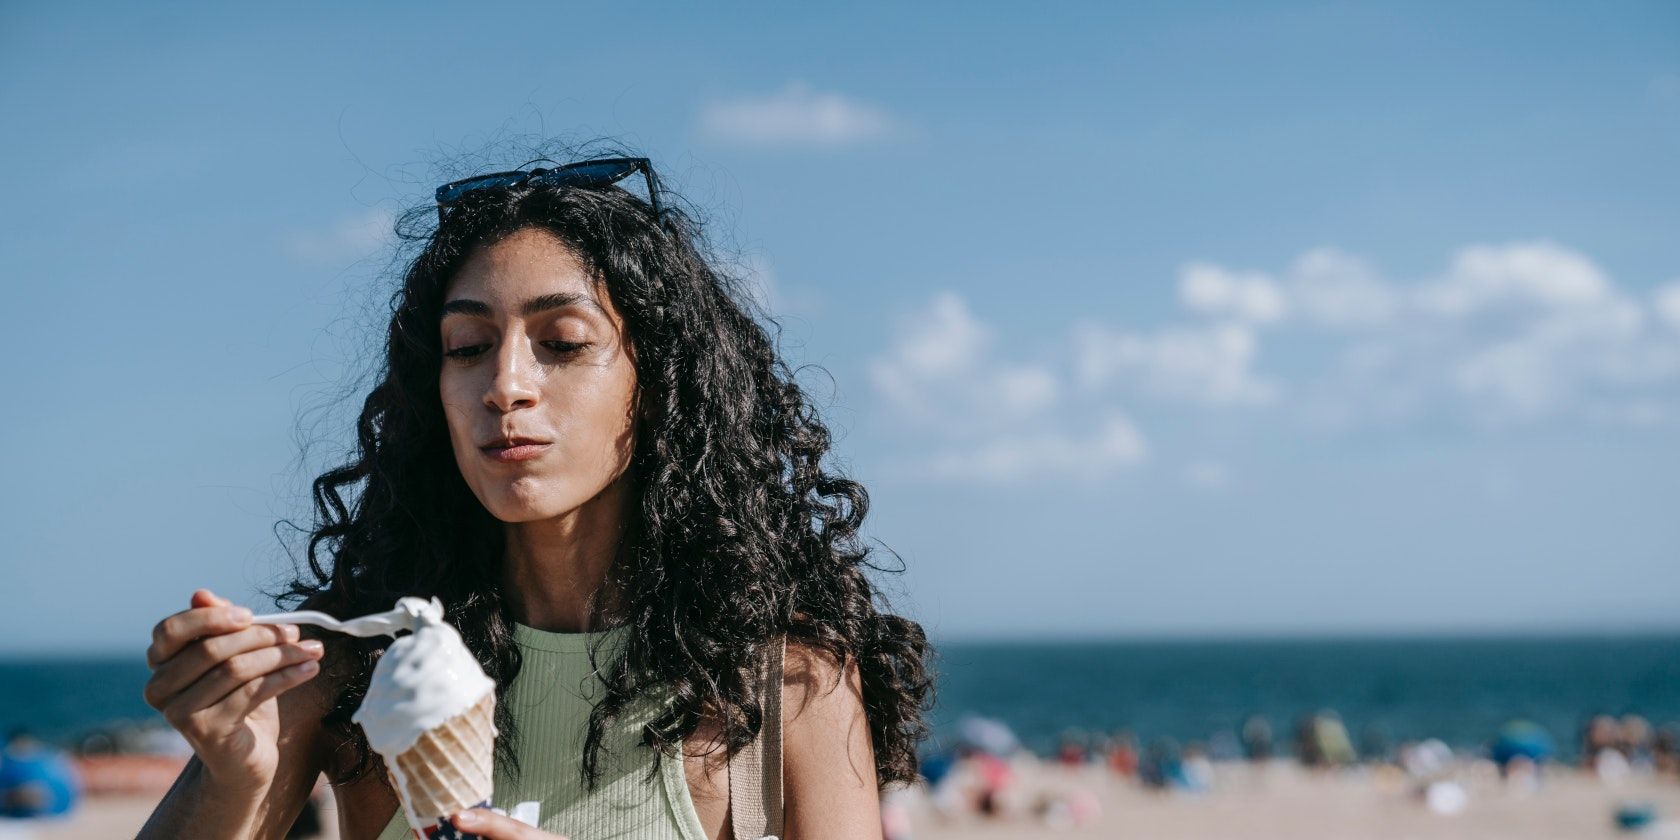 woman eating vanilla ice-cream cone